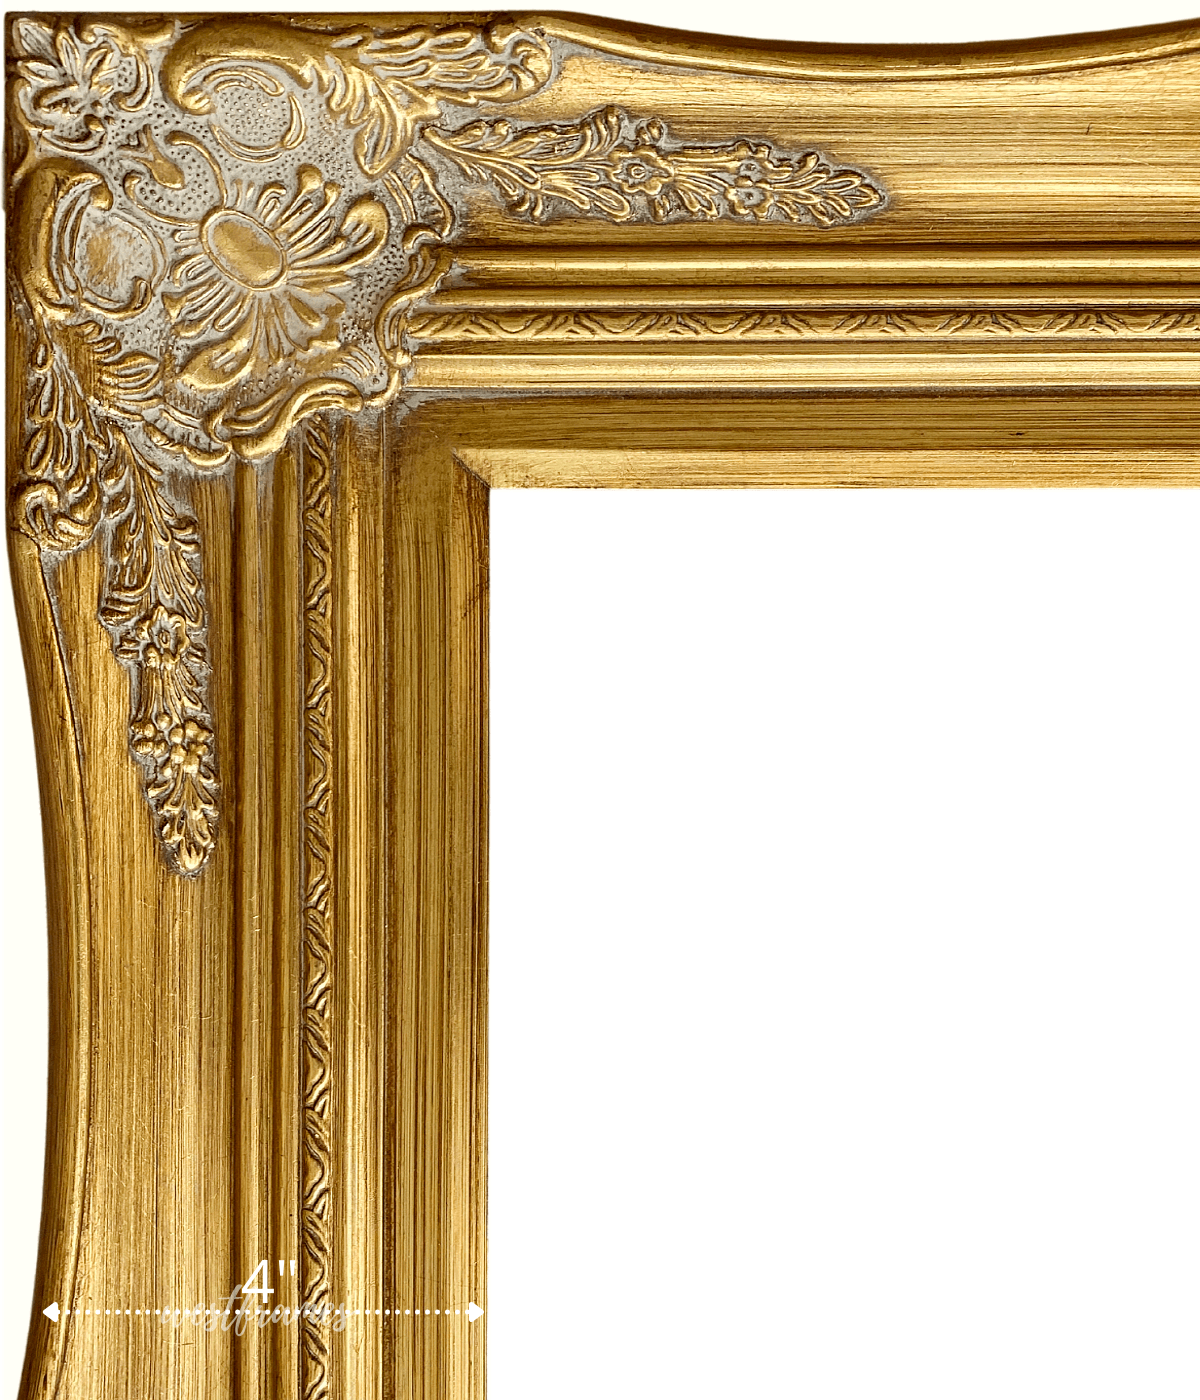 12x16 Vintage Gold Ornate Art Frame, Decorative Baroque Wall Picture Frame